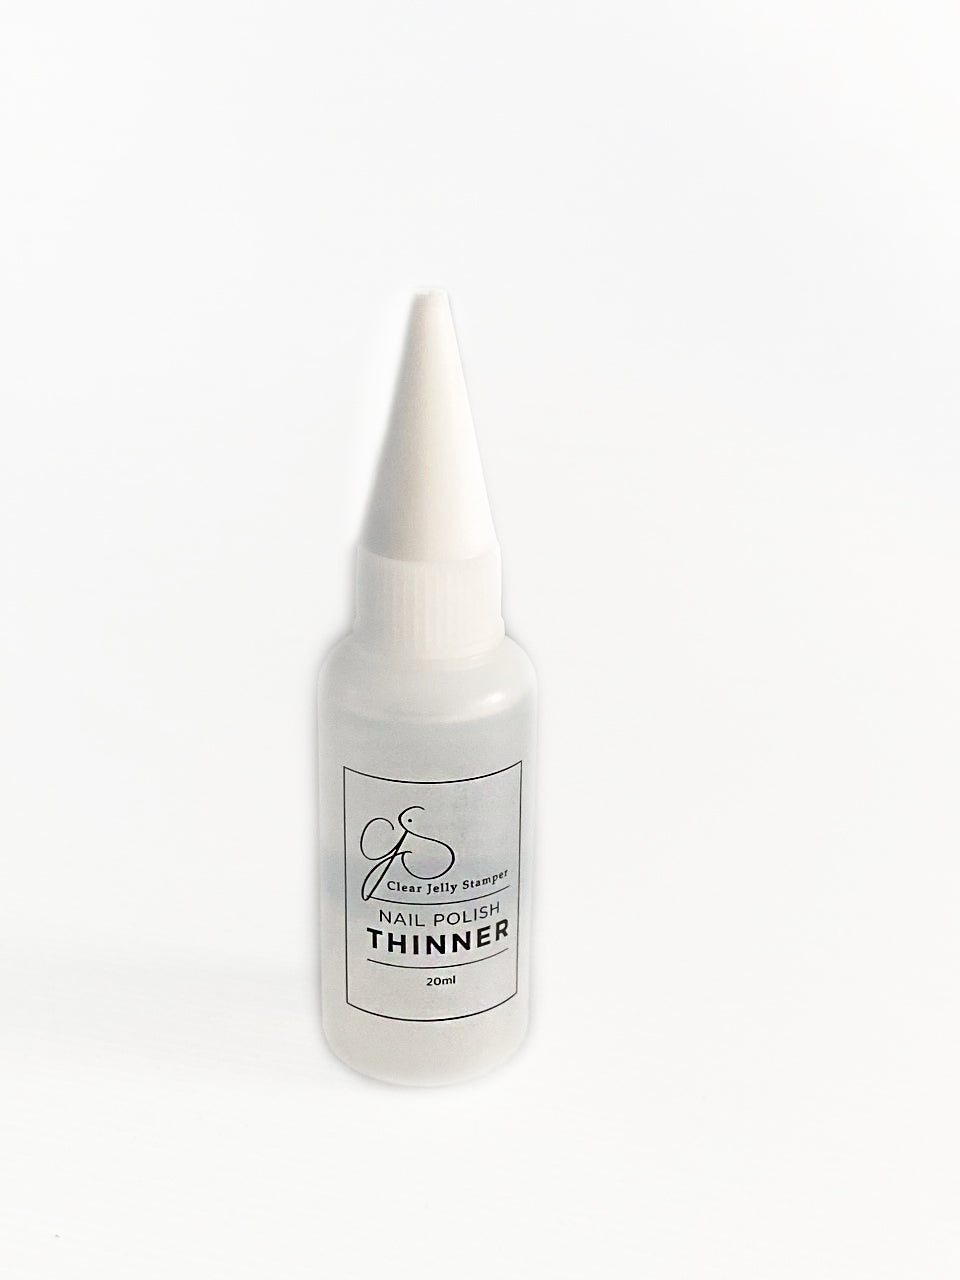 Nail Polish Thinner Price - Arad Branding